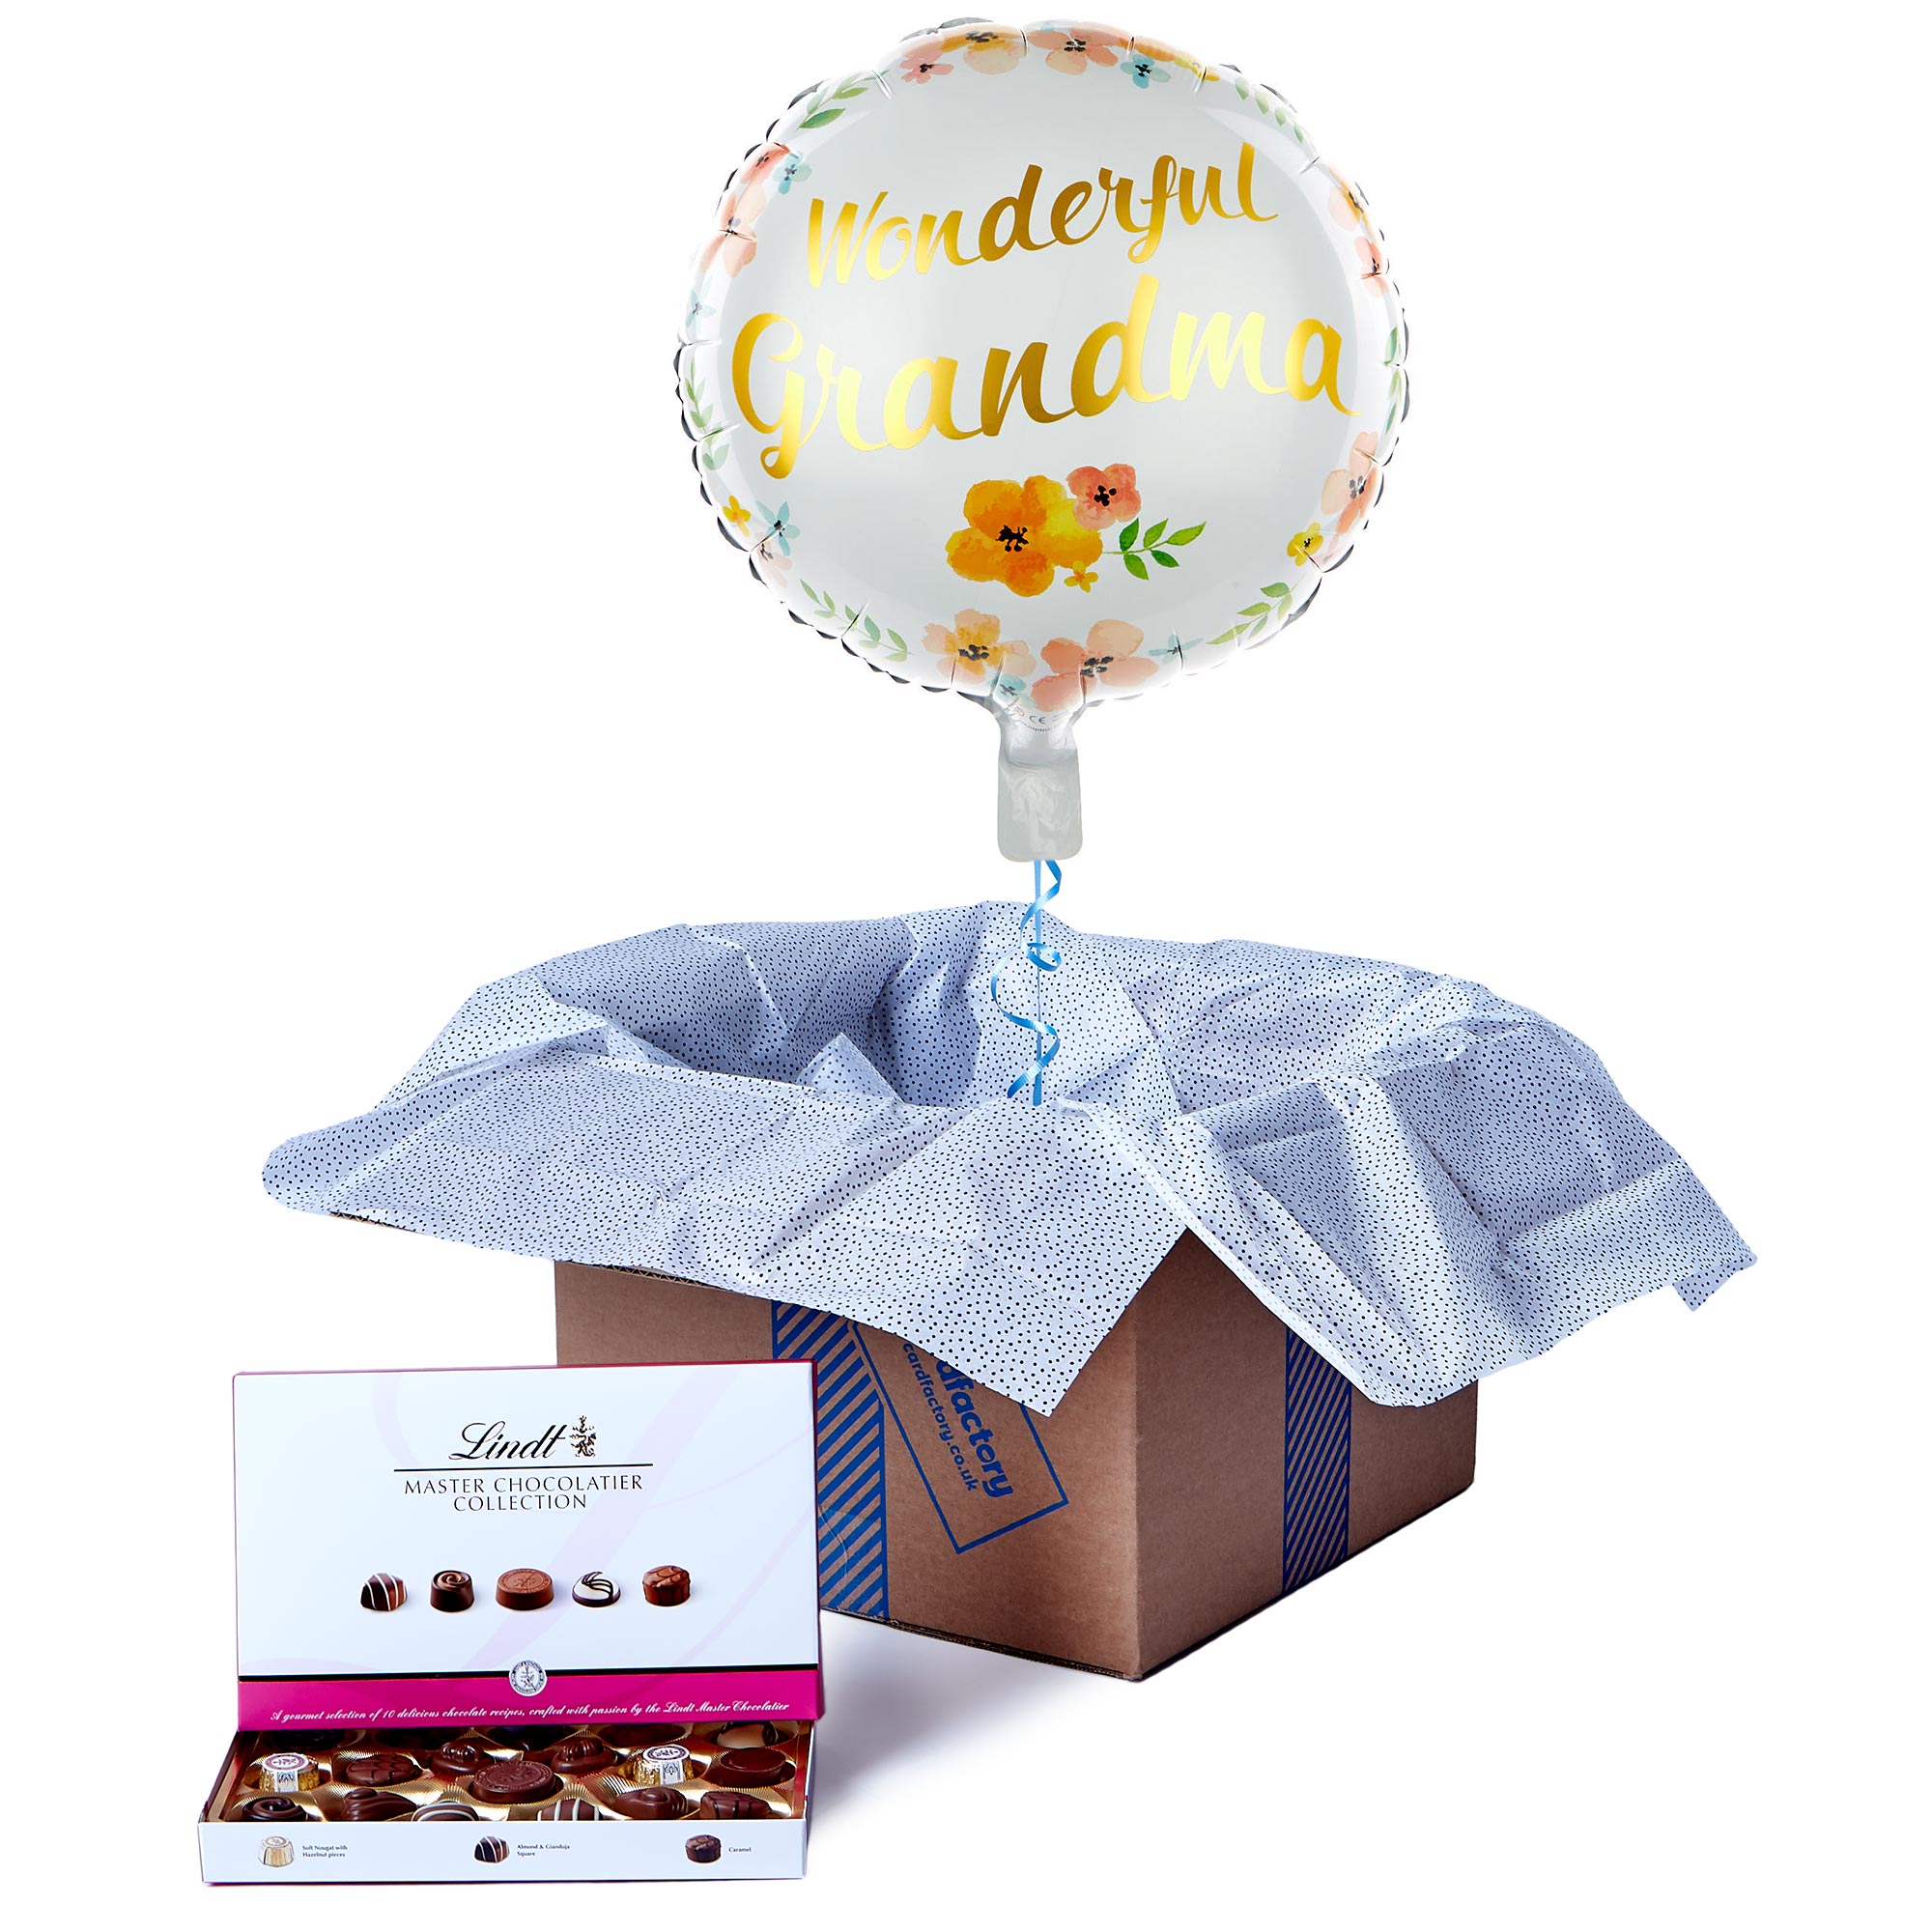 Wonderful Grandma Balloon & Lindt Chocolates - FREE GIFT CARD!